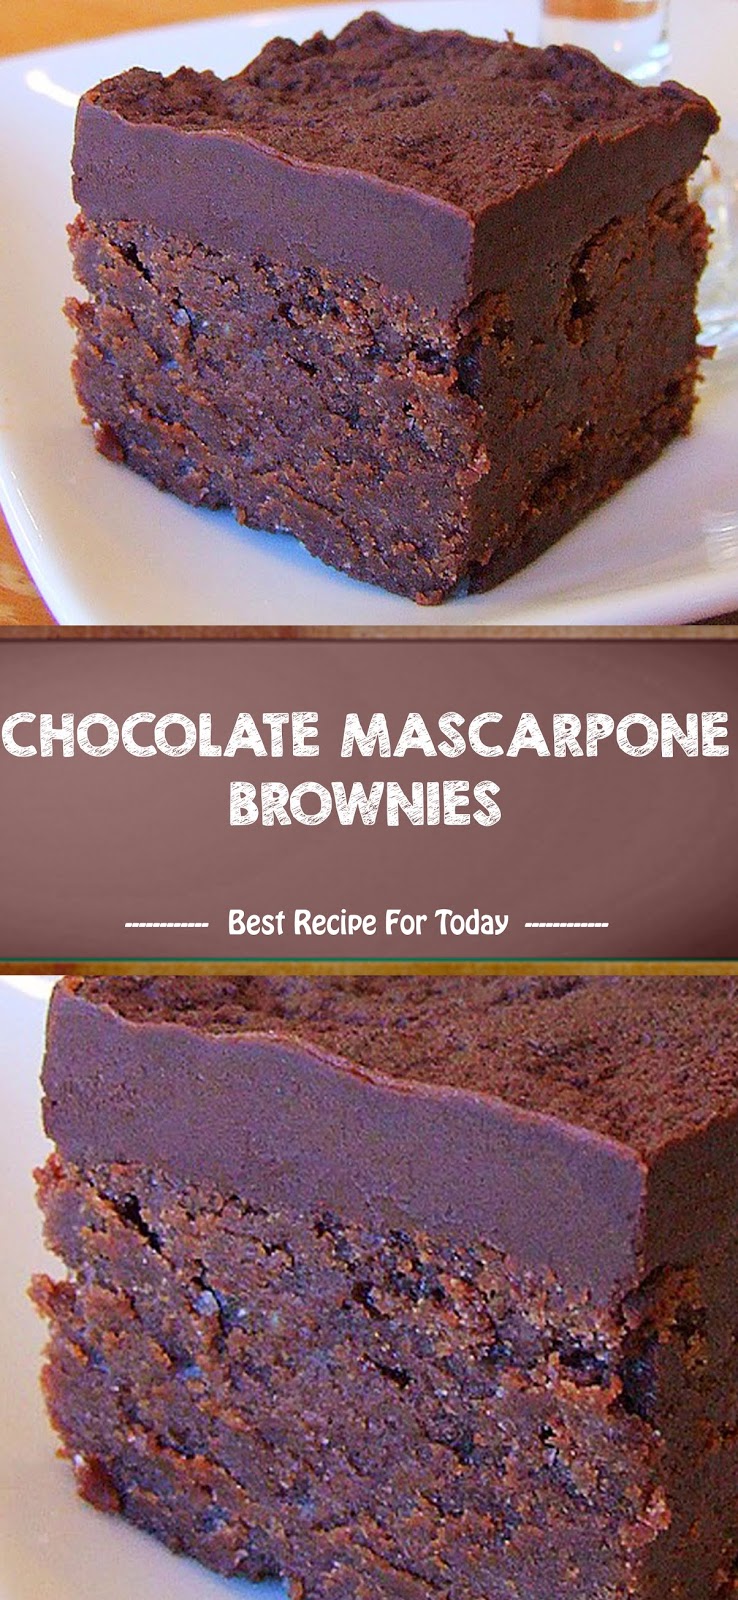 CHOCOLATE MASCARPONE BROWNIES - 3 SECONDS